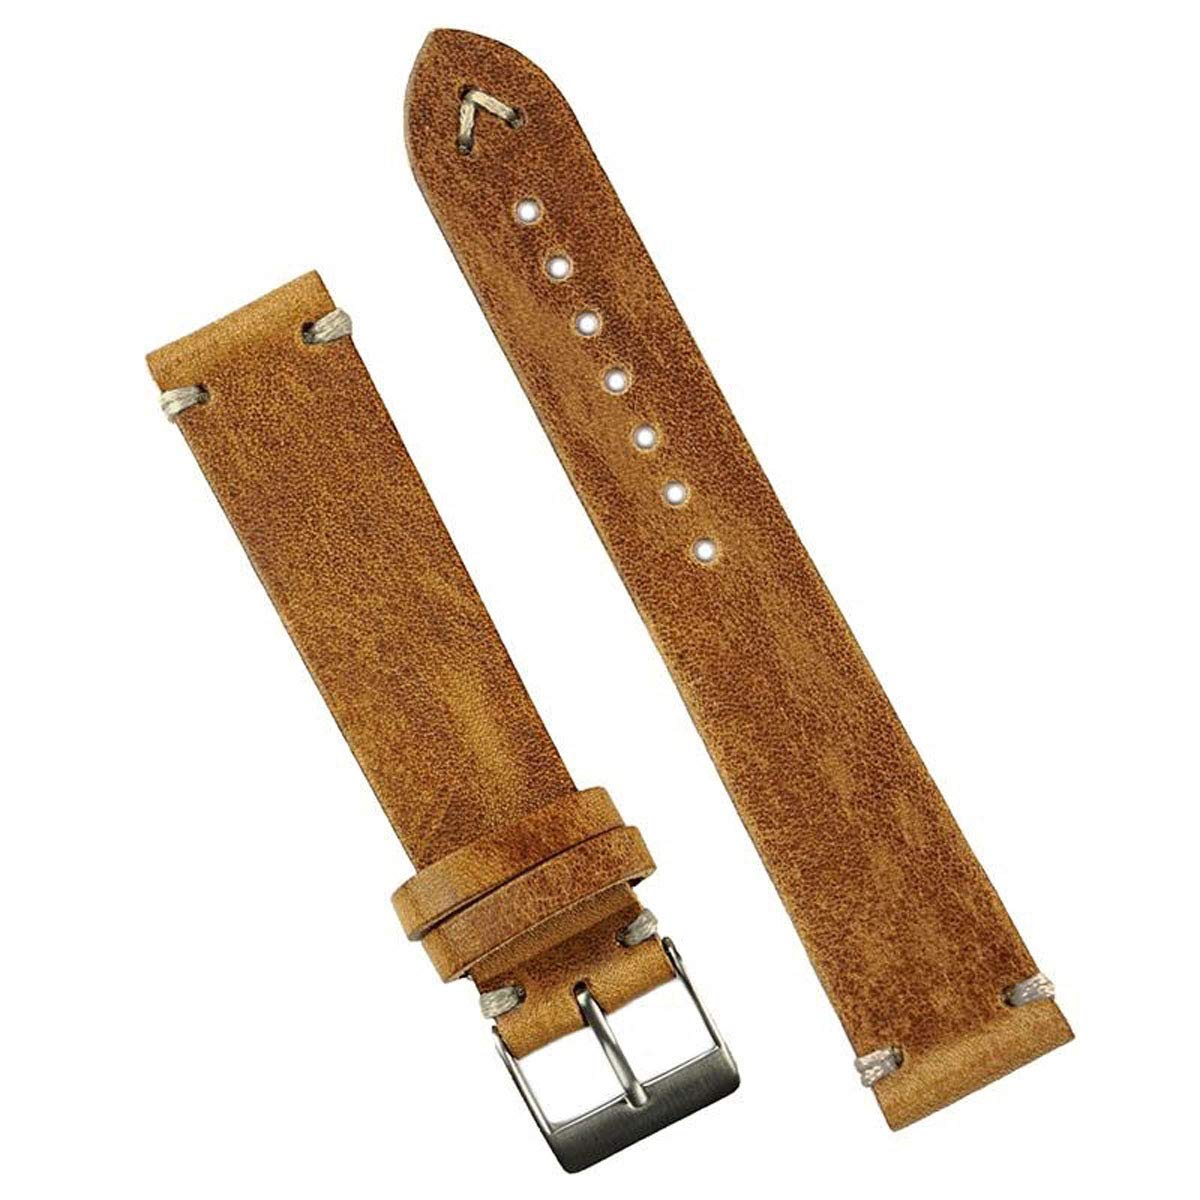 B & R Bands 22mm Oak Classic Vintage Leather Watch Band Strap Handsewn Ecru-stitch - Medium Length